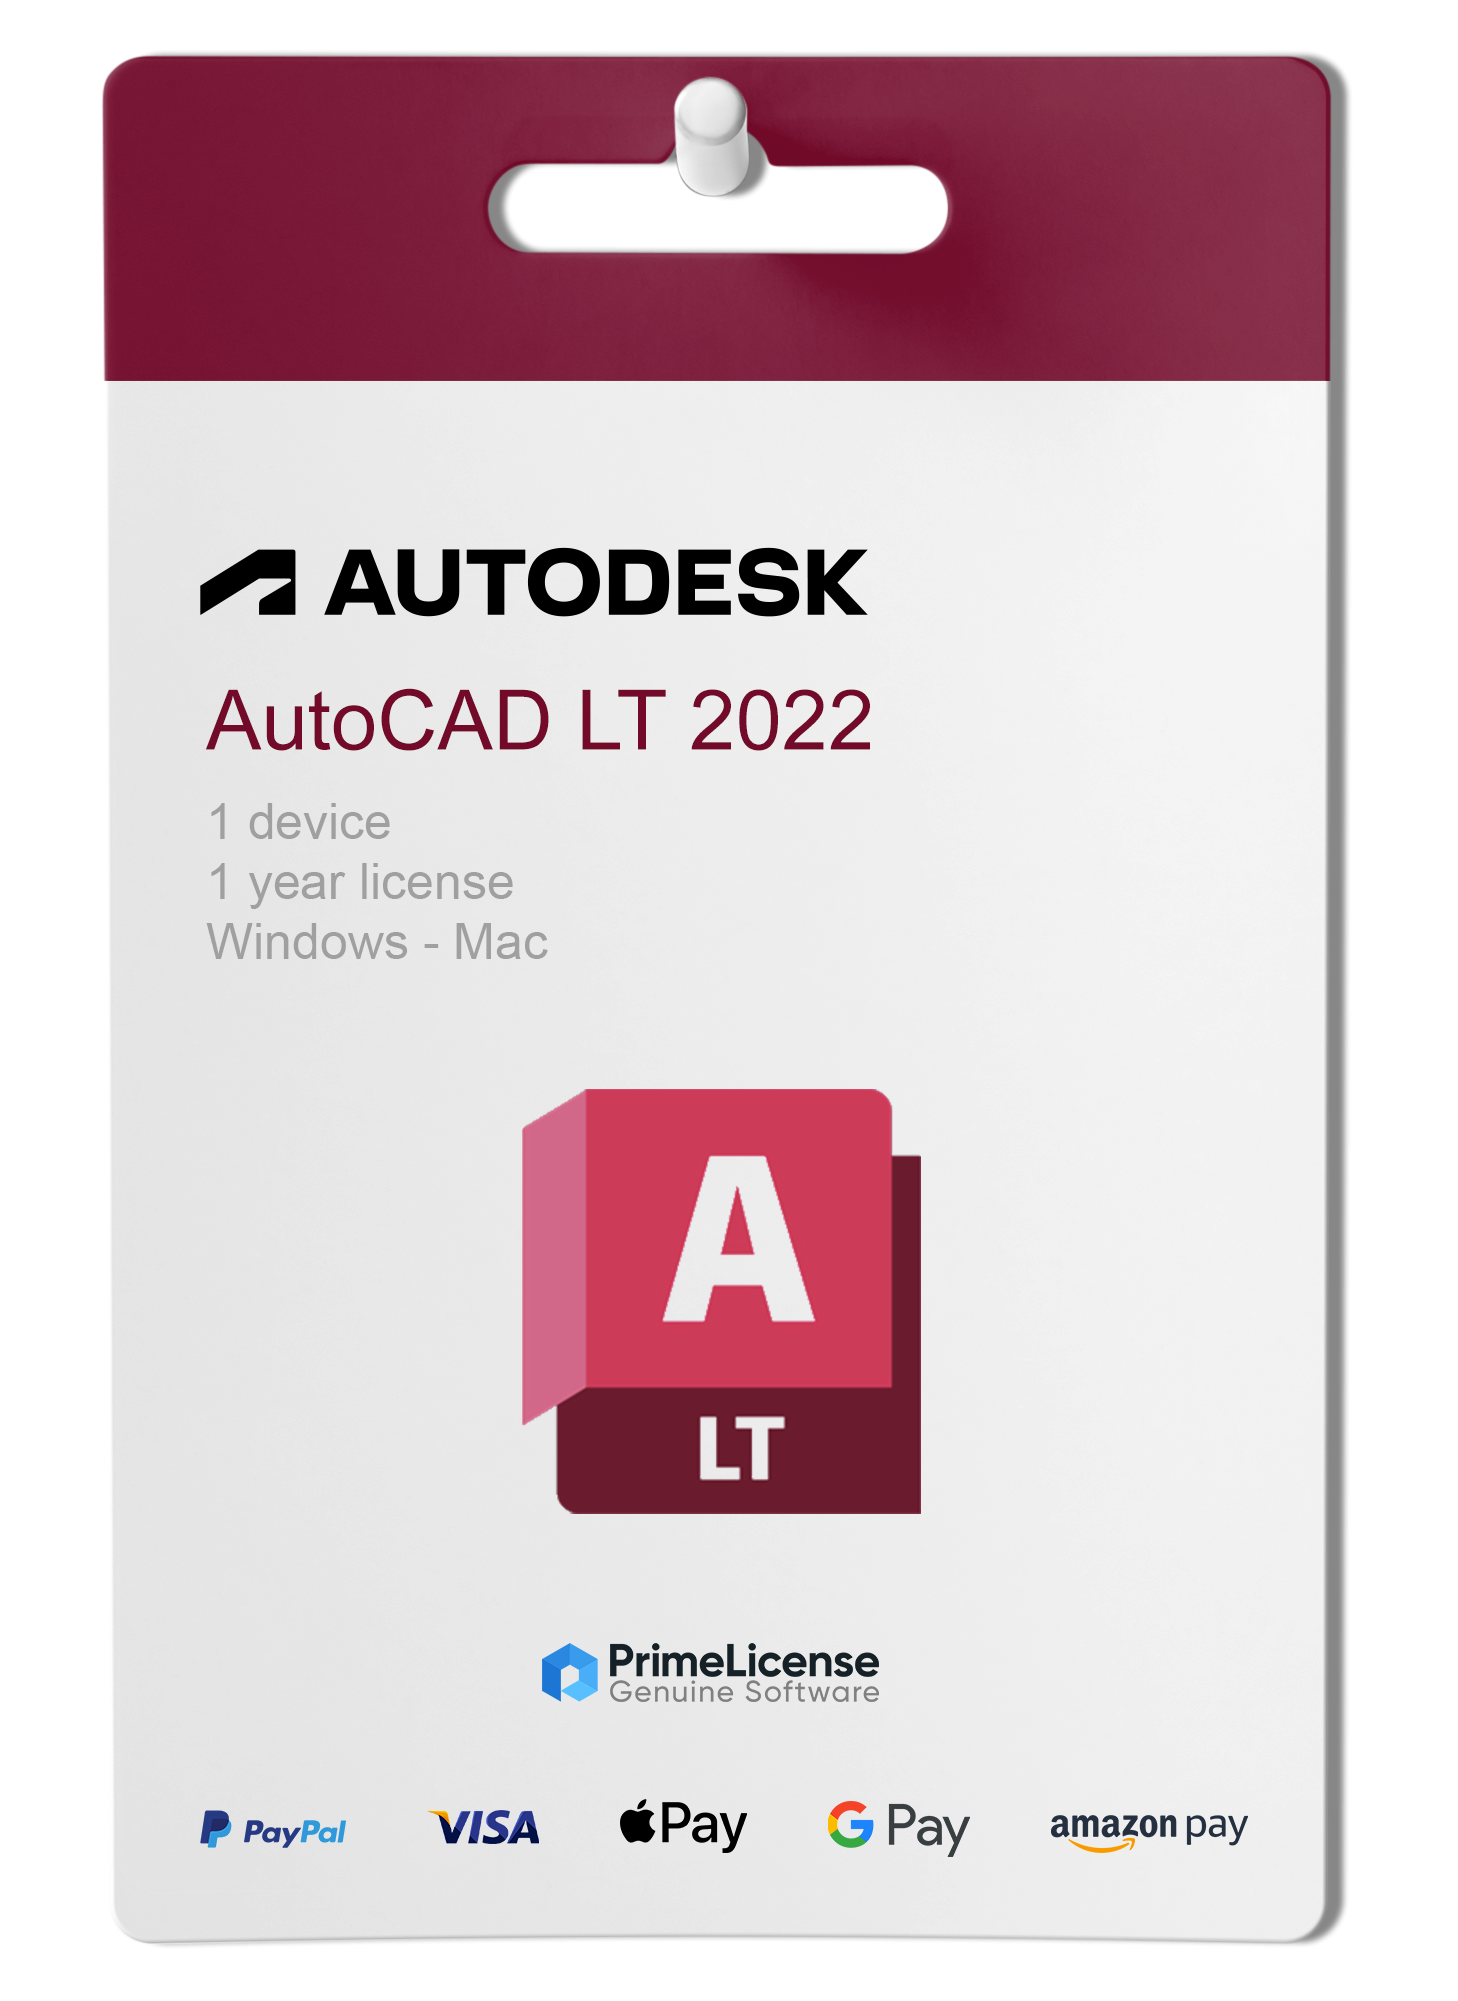 Autodesk AutoCAD LT 2022 macOS